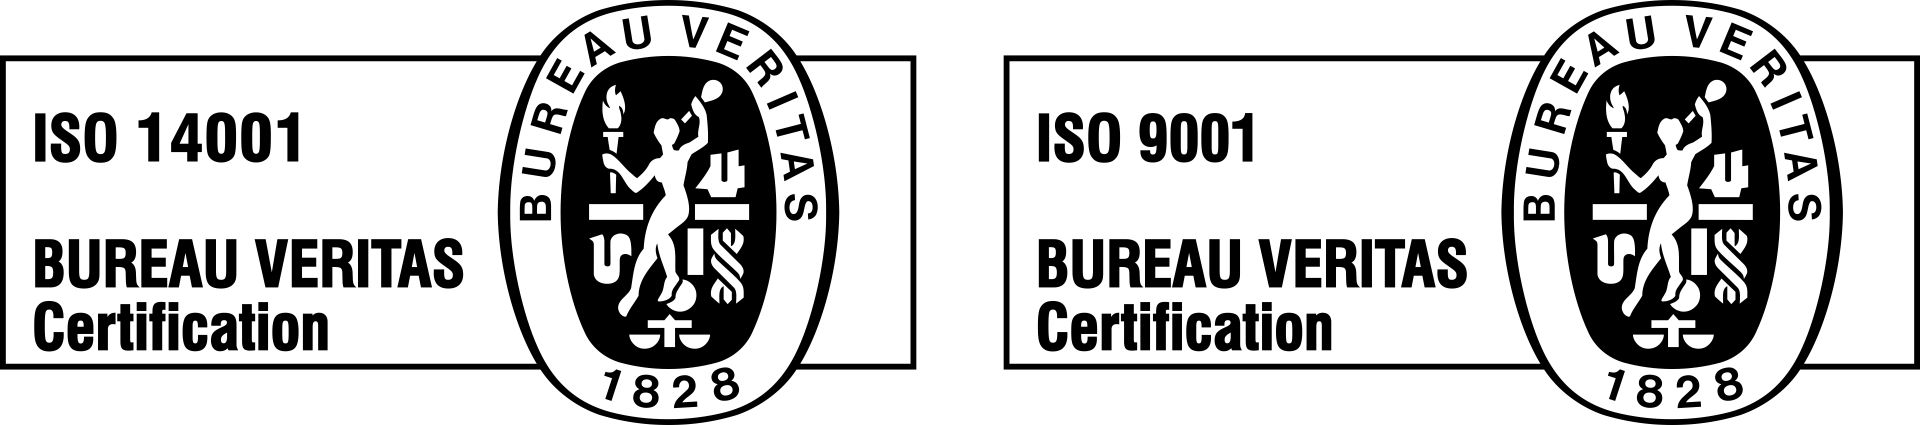 Веритас займ личный. Бюро Веритас. ISO 9001 Bureau veritas Certification. Знак Bureau veritas. Бюро Веритас ISO 14001:2015.